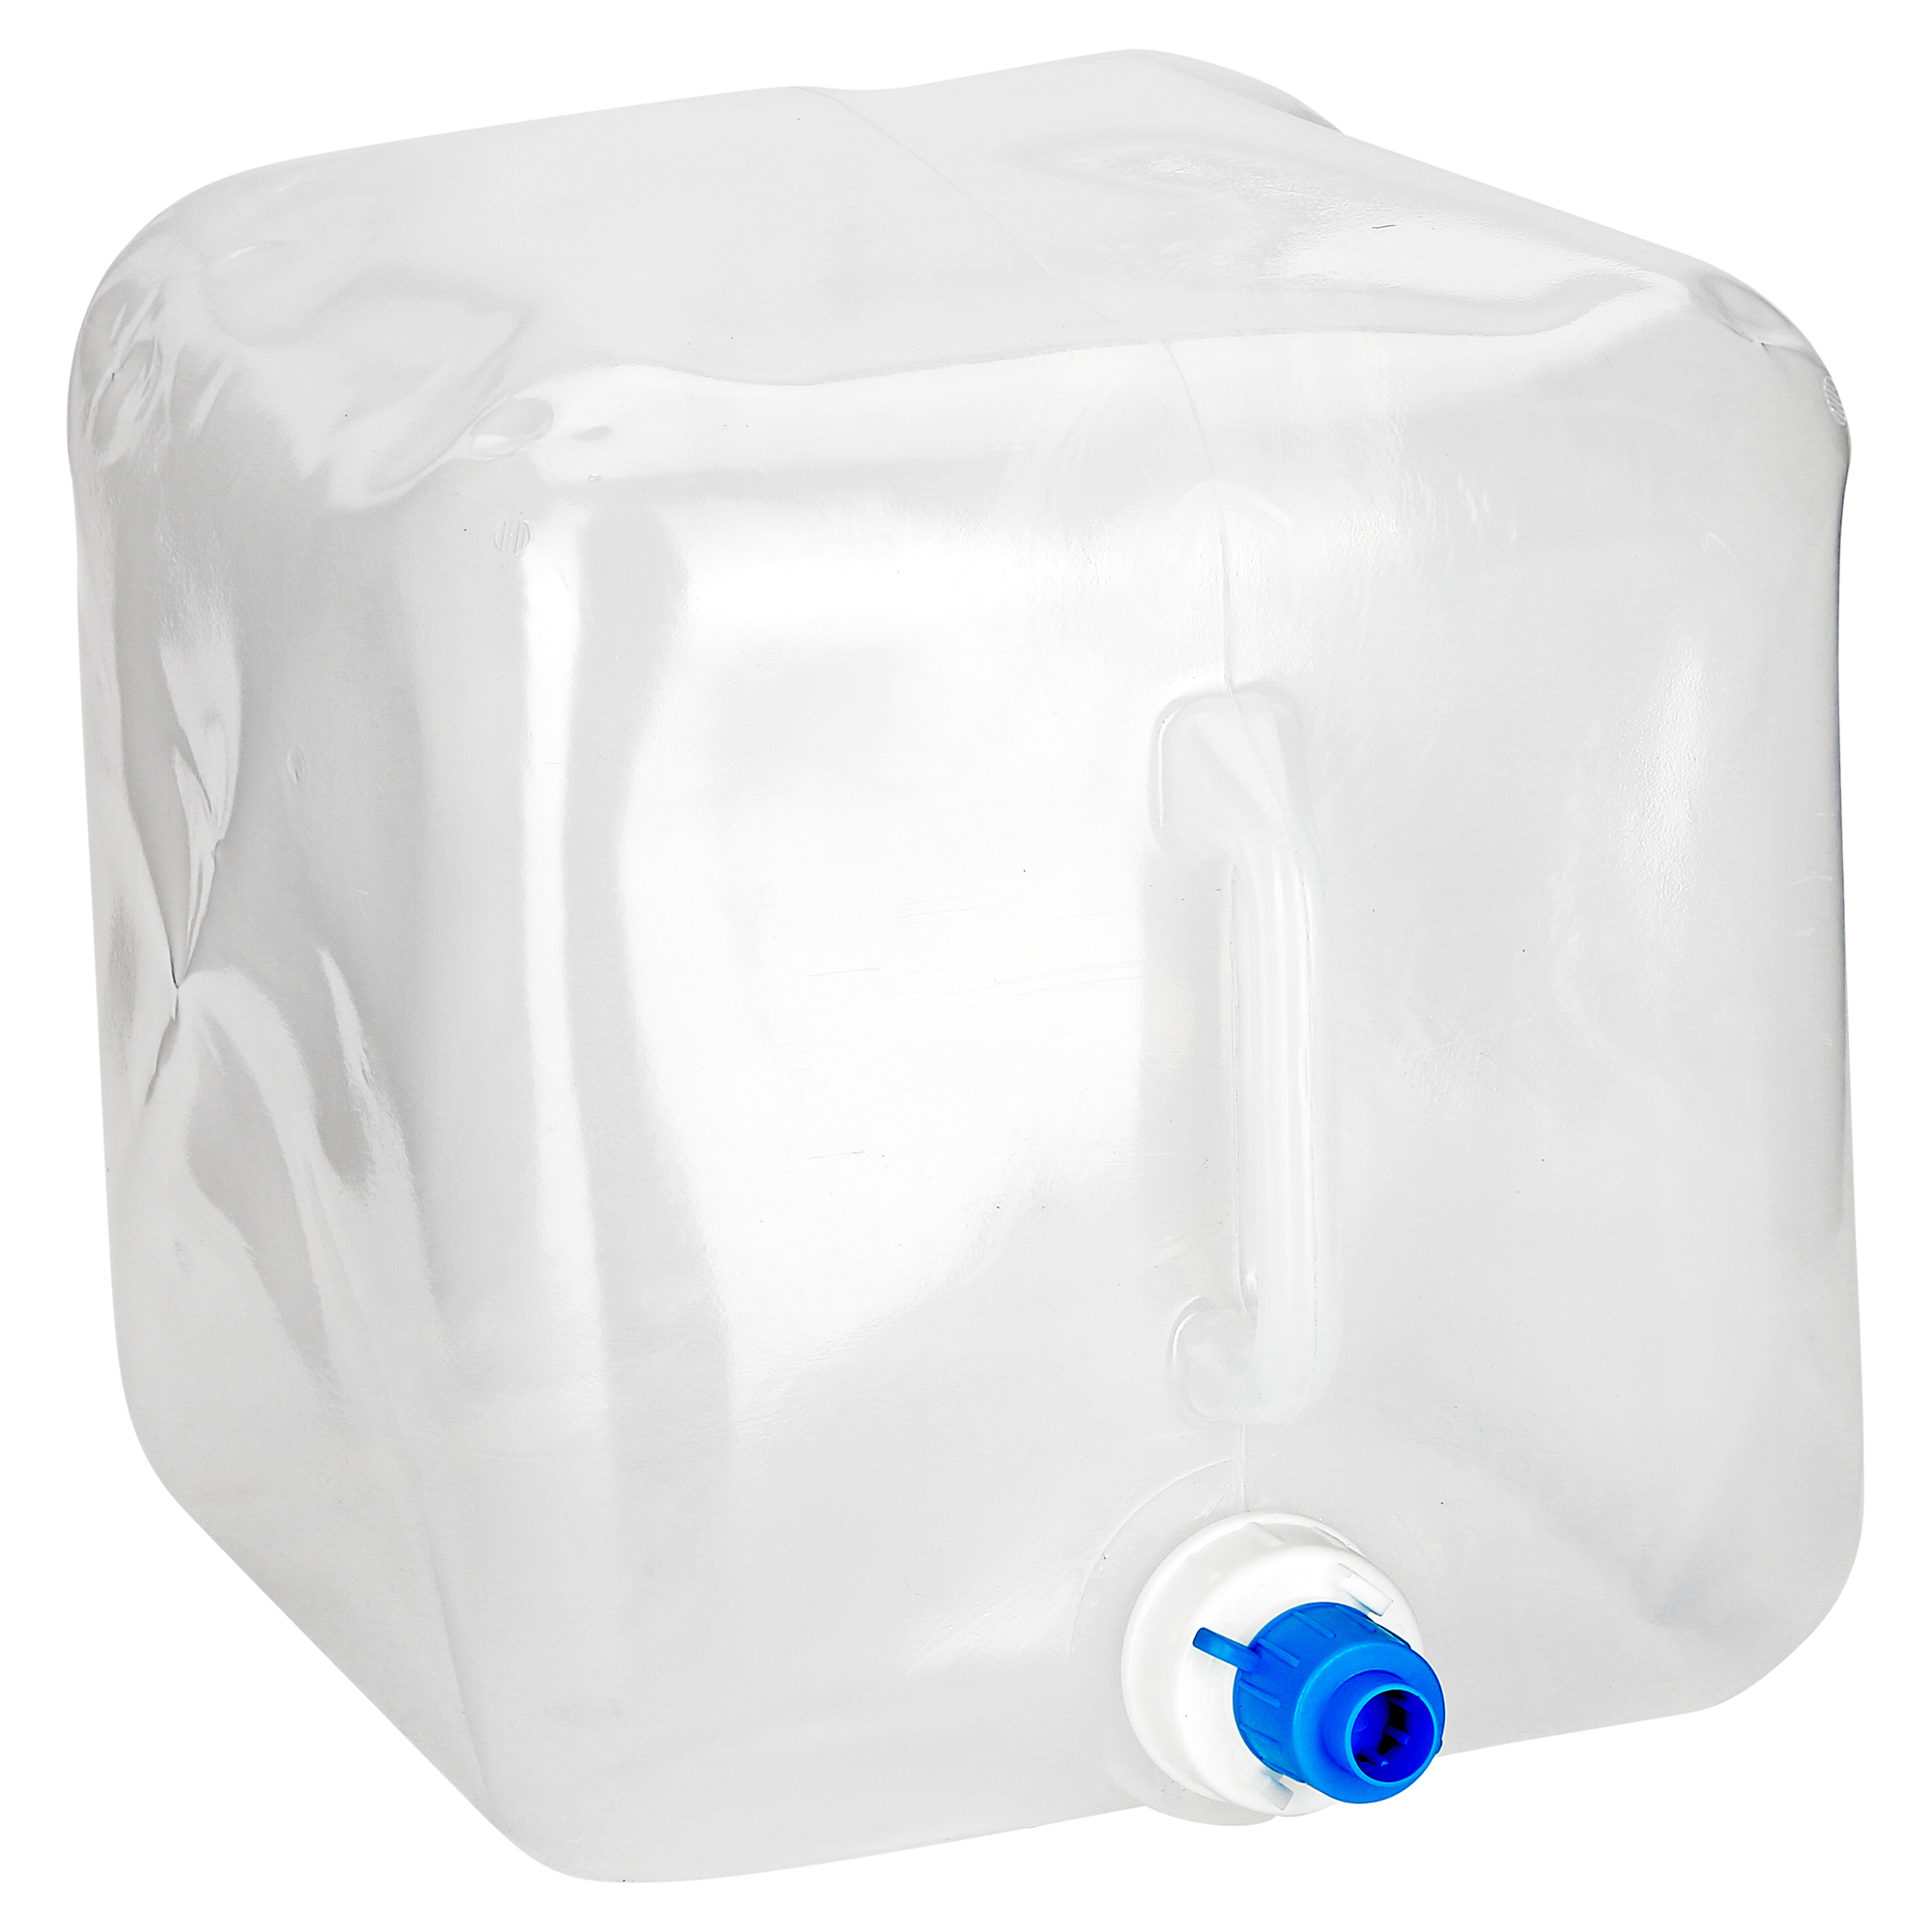 OUTDOOR 20 L Abwasser Kanister Camping Faltkanister Wasser Tank Behälter  faltbar online kaufen bei Netto